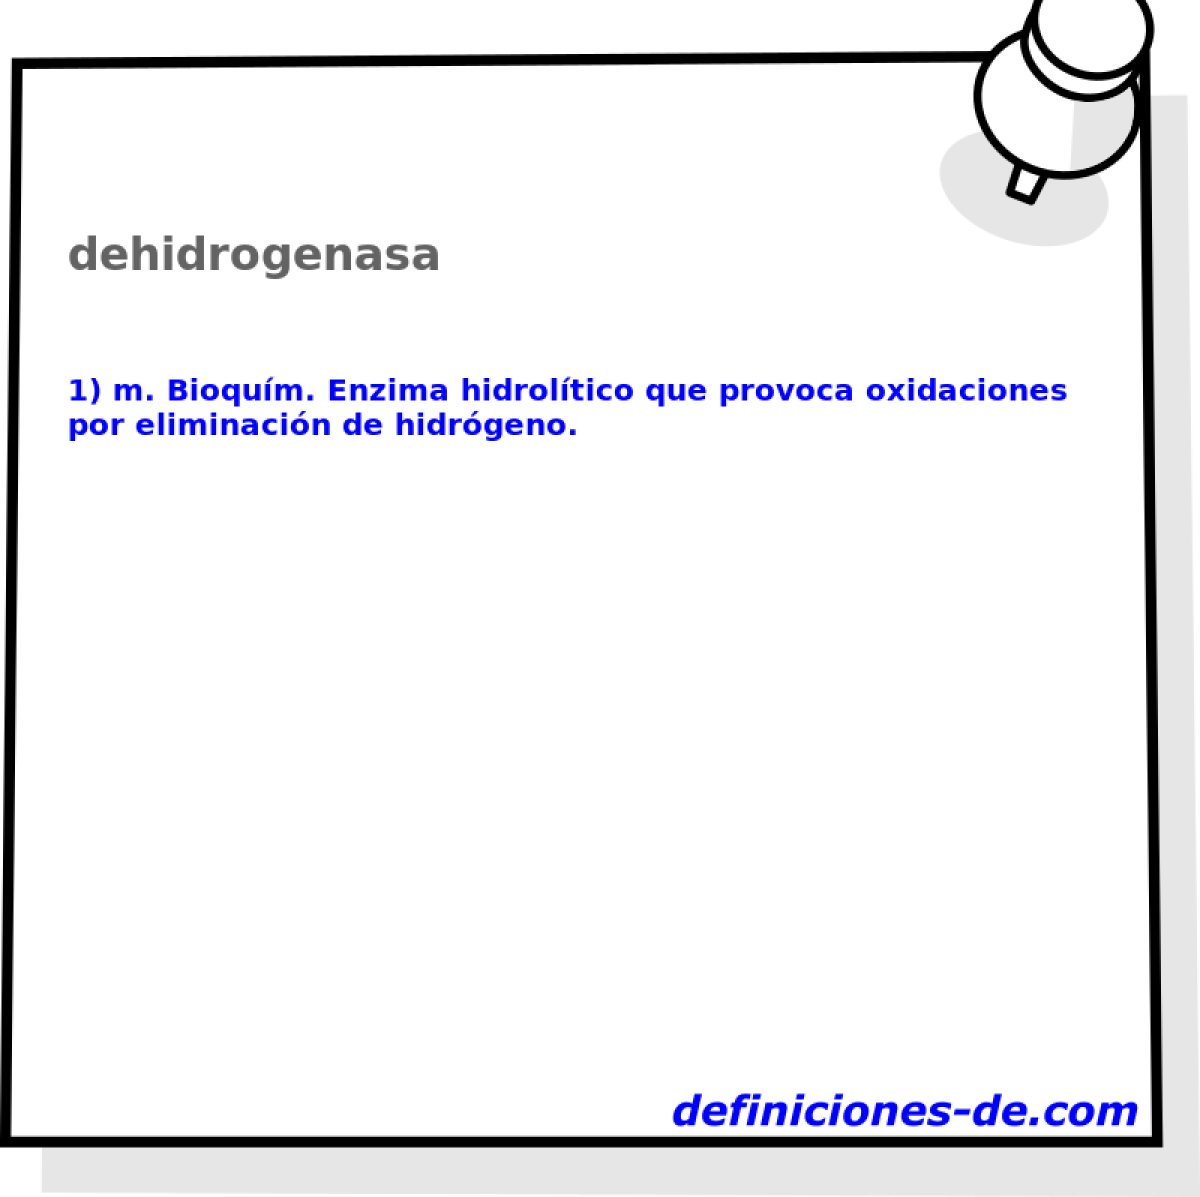 dehidrogenasa 